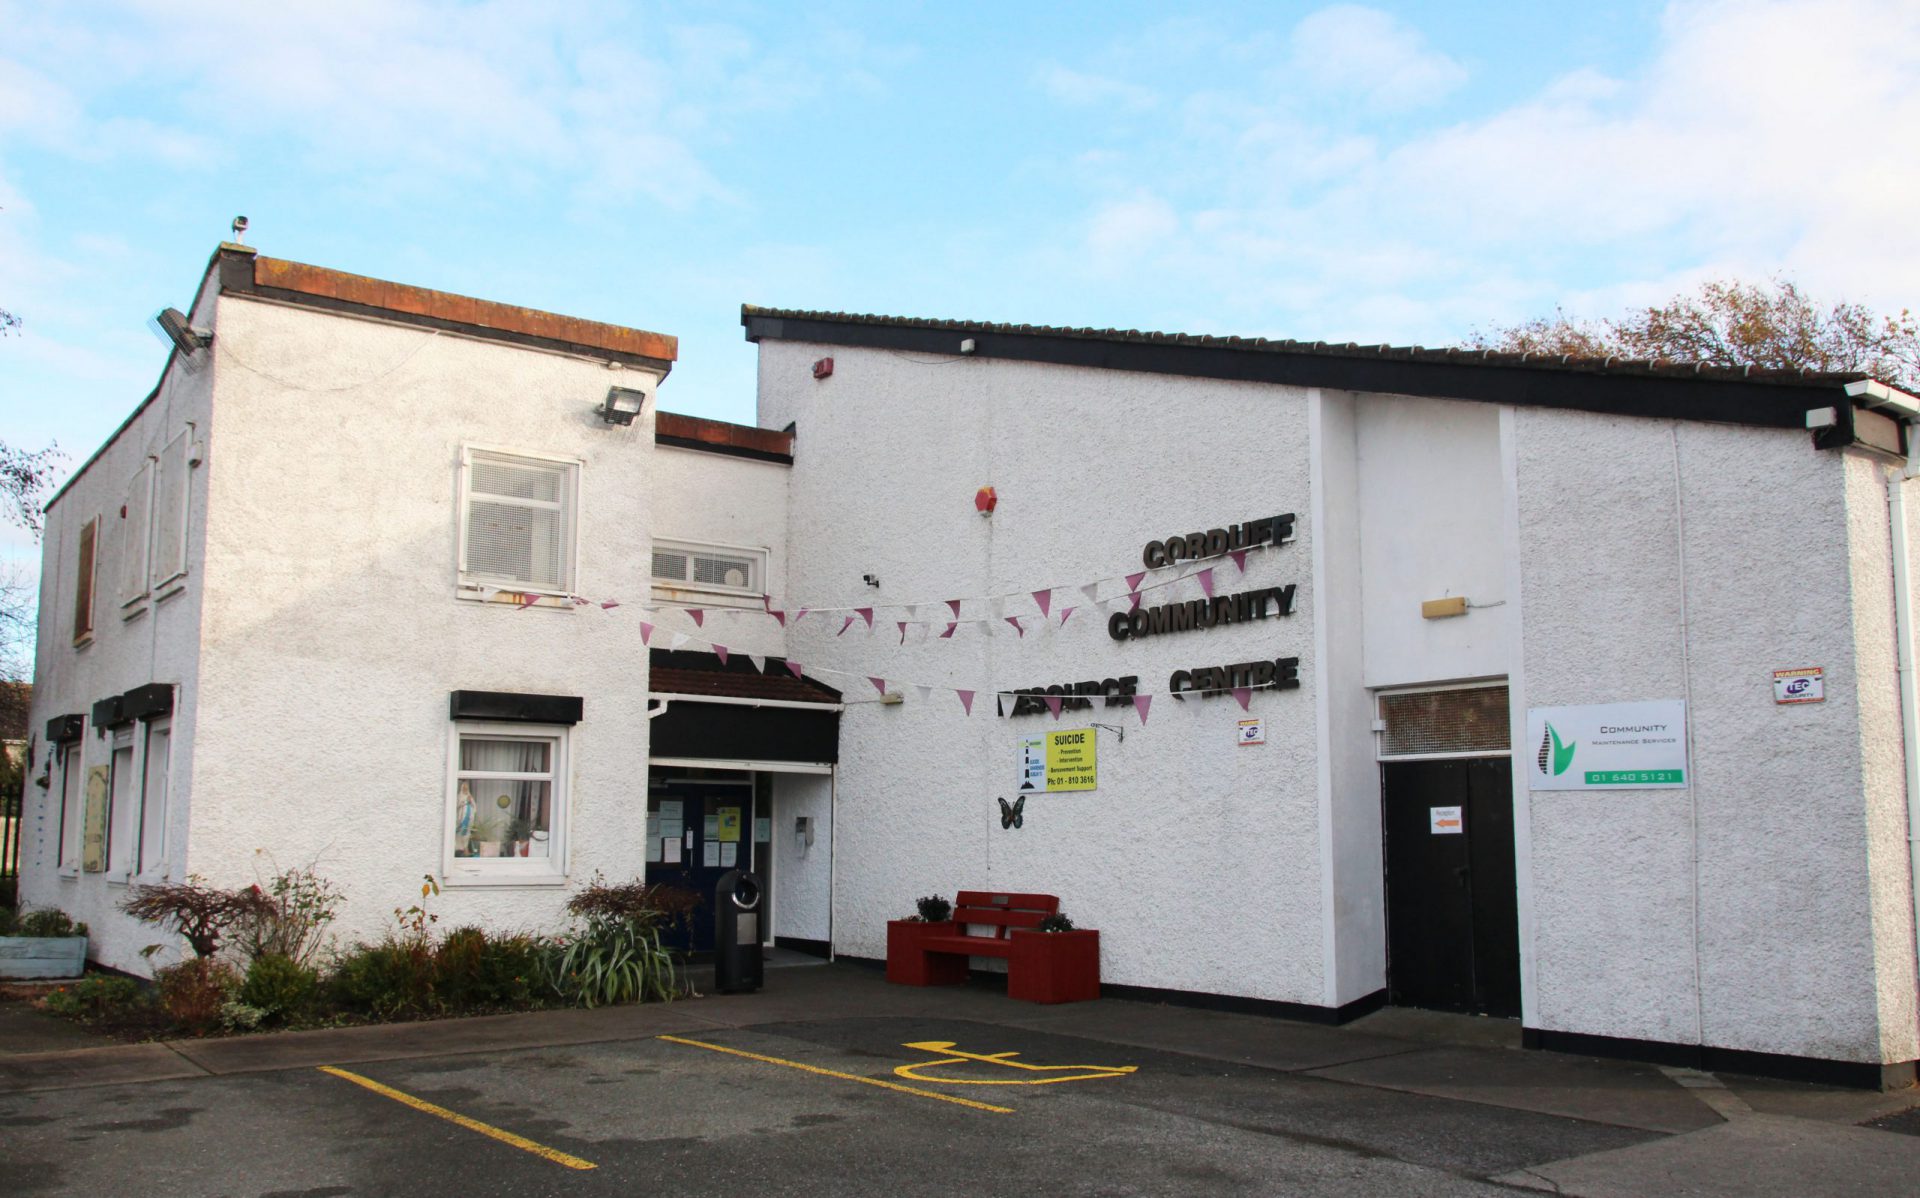 Corduff Community Resource Centre - Entrance